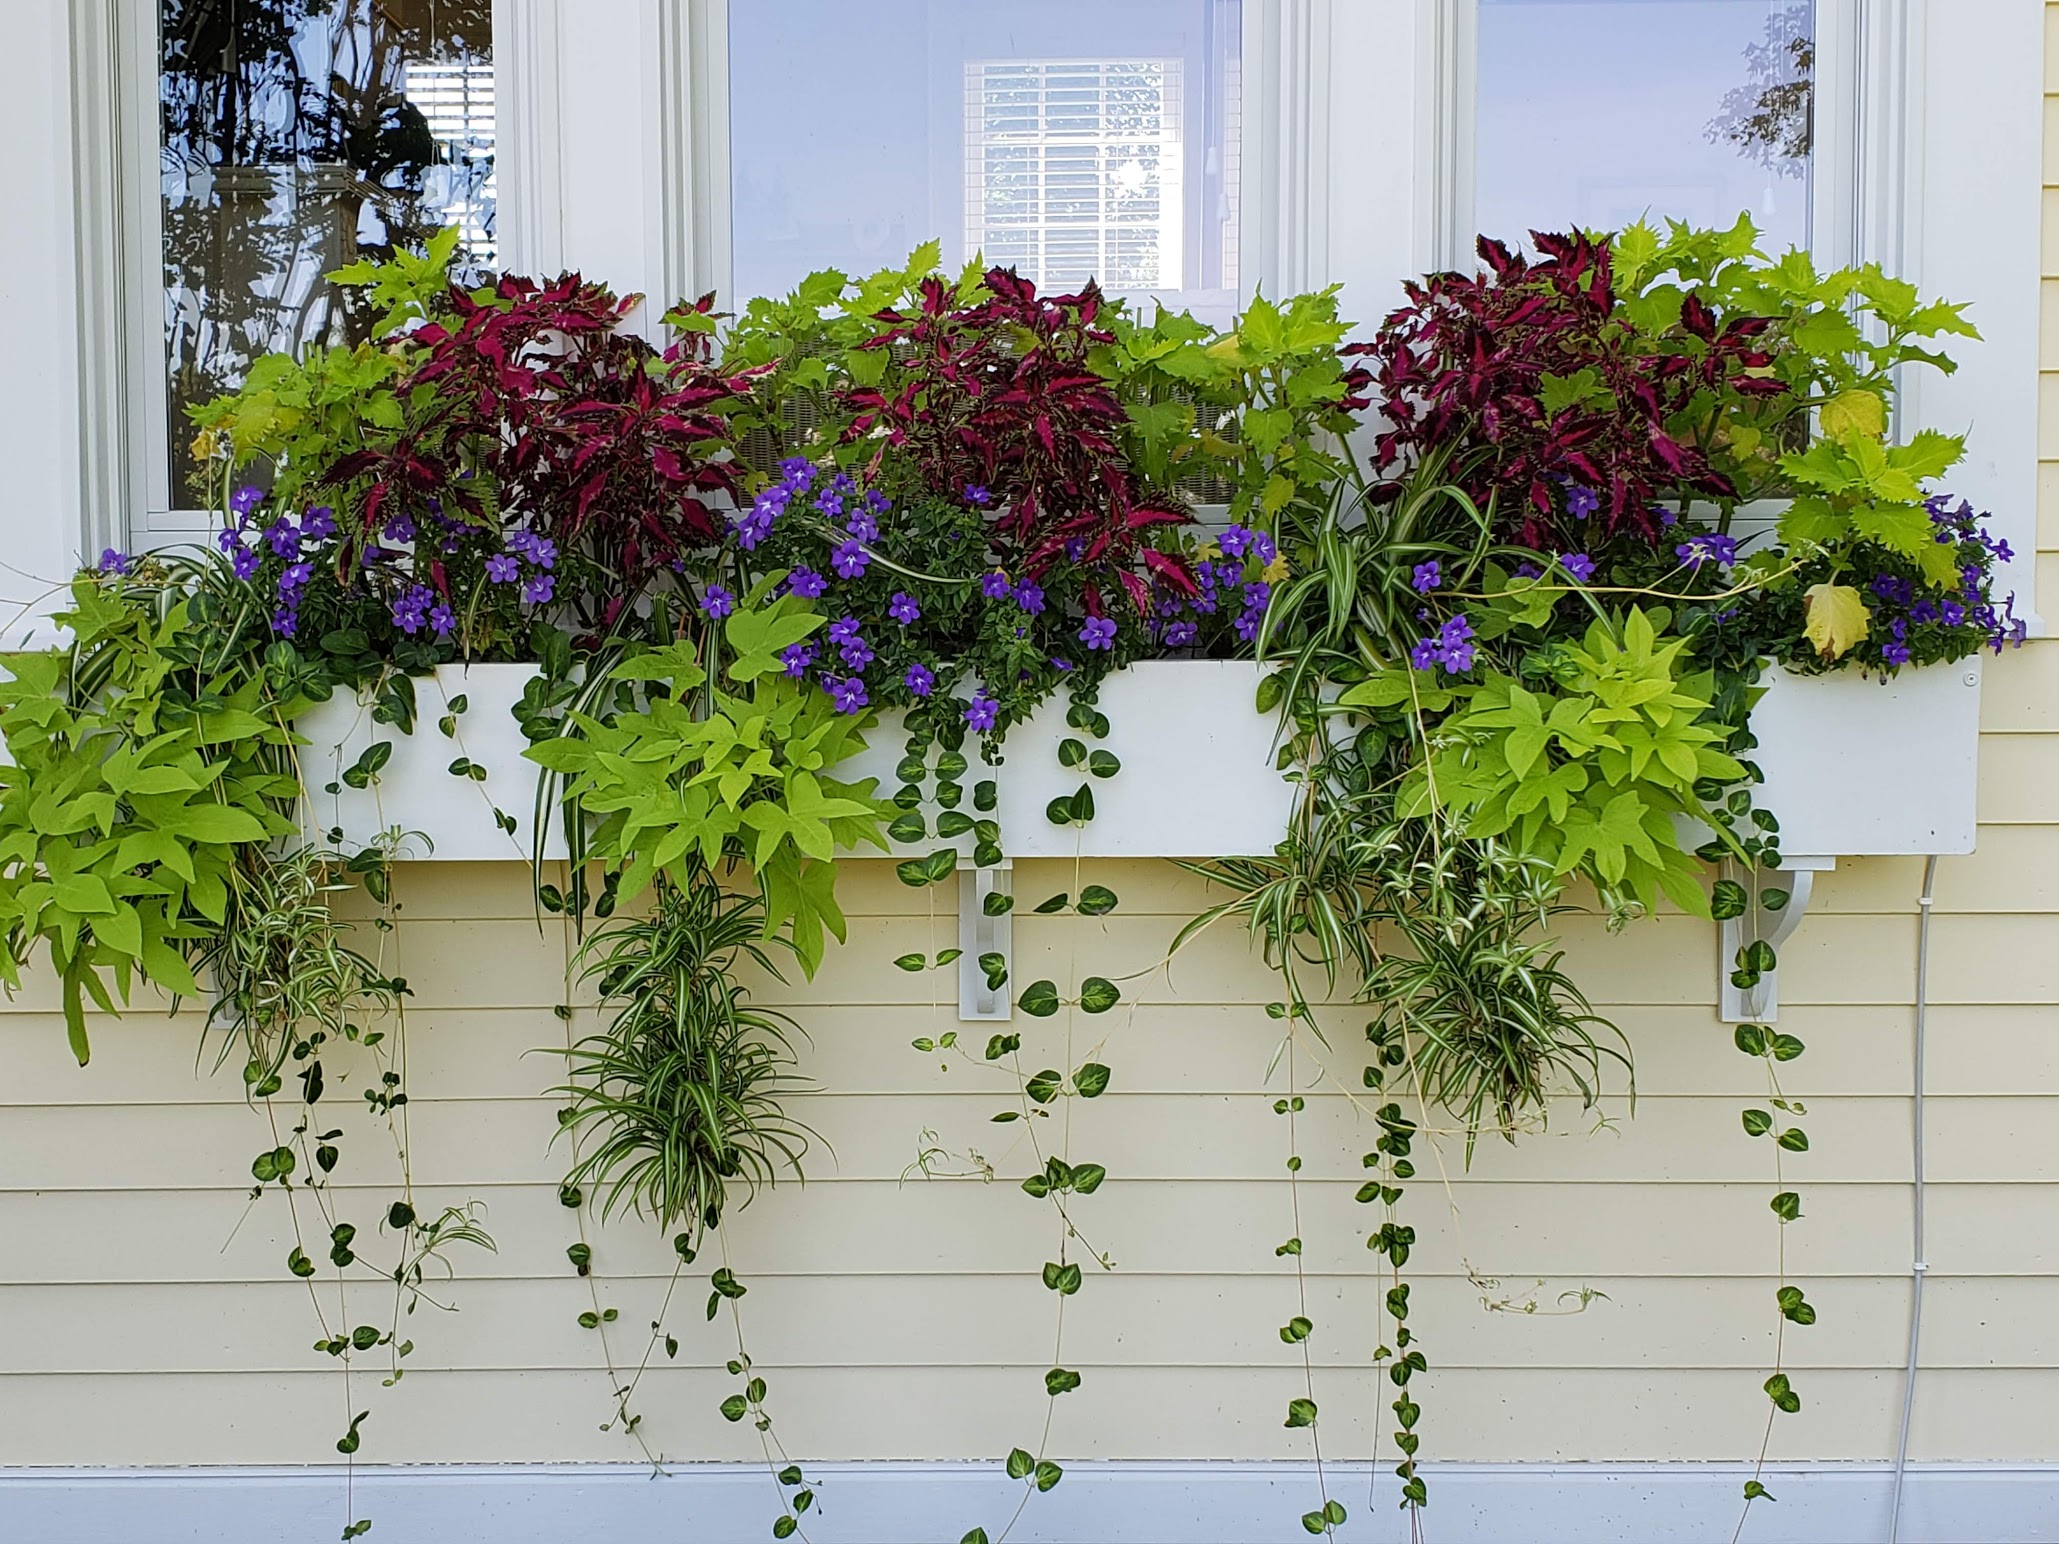 Window planter